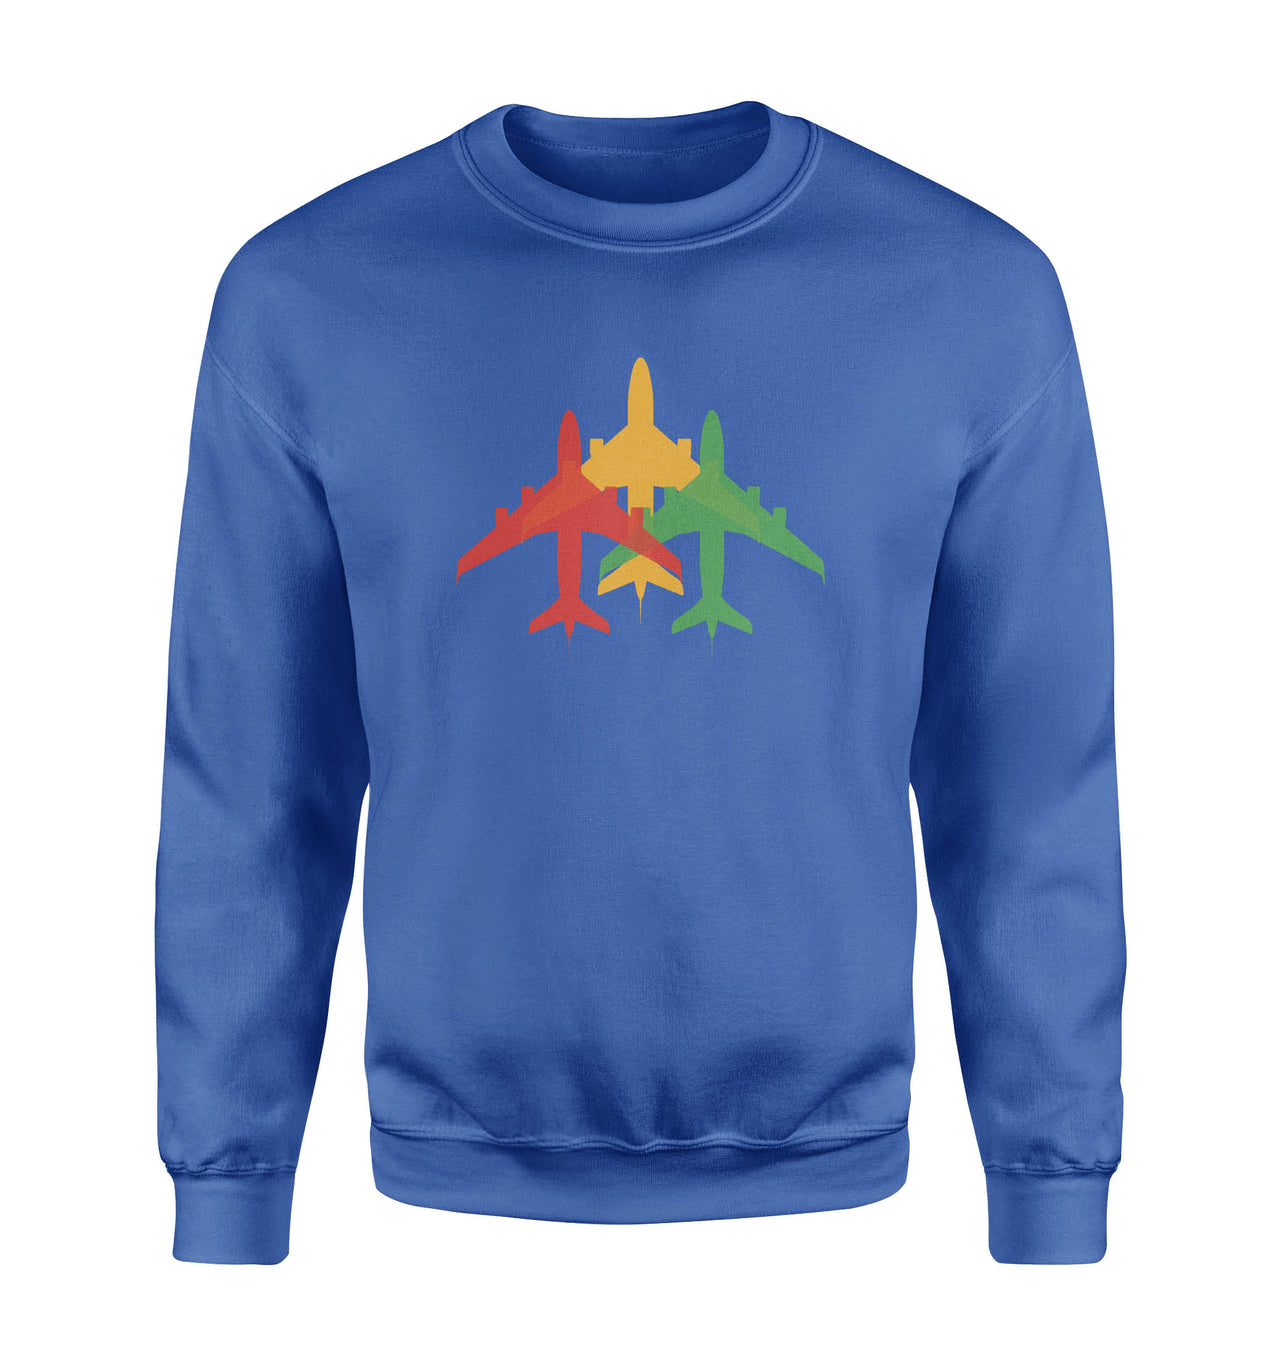 Colourful 3 Airplanes Designed Sweatshirts